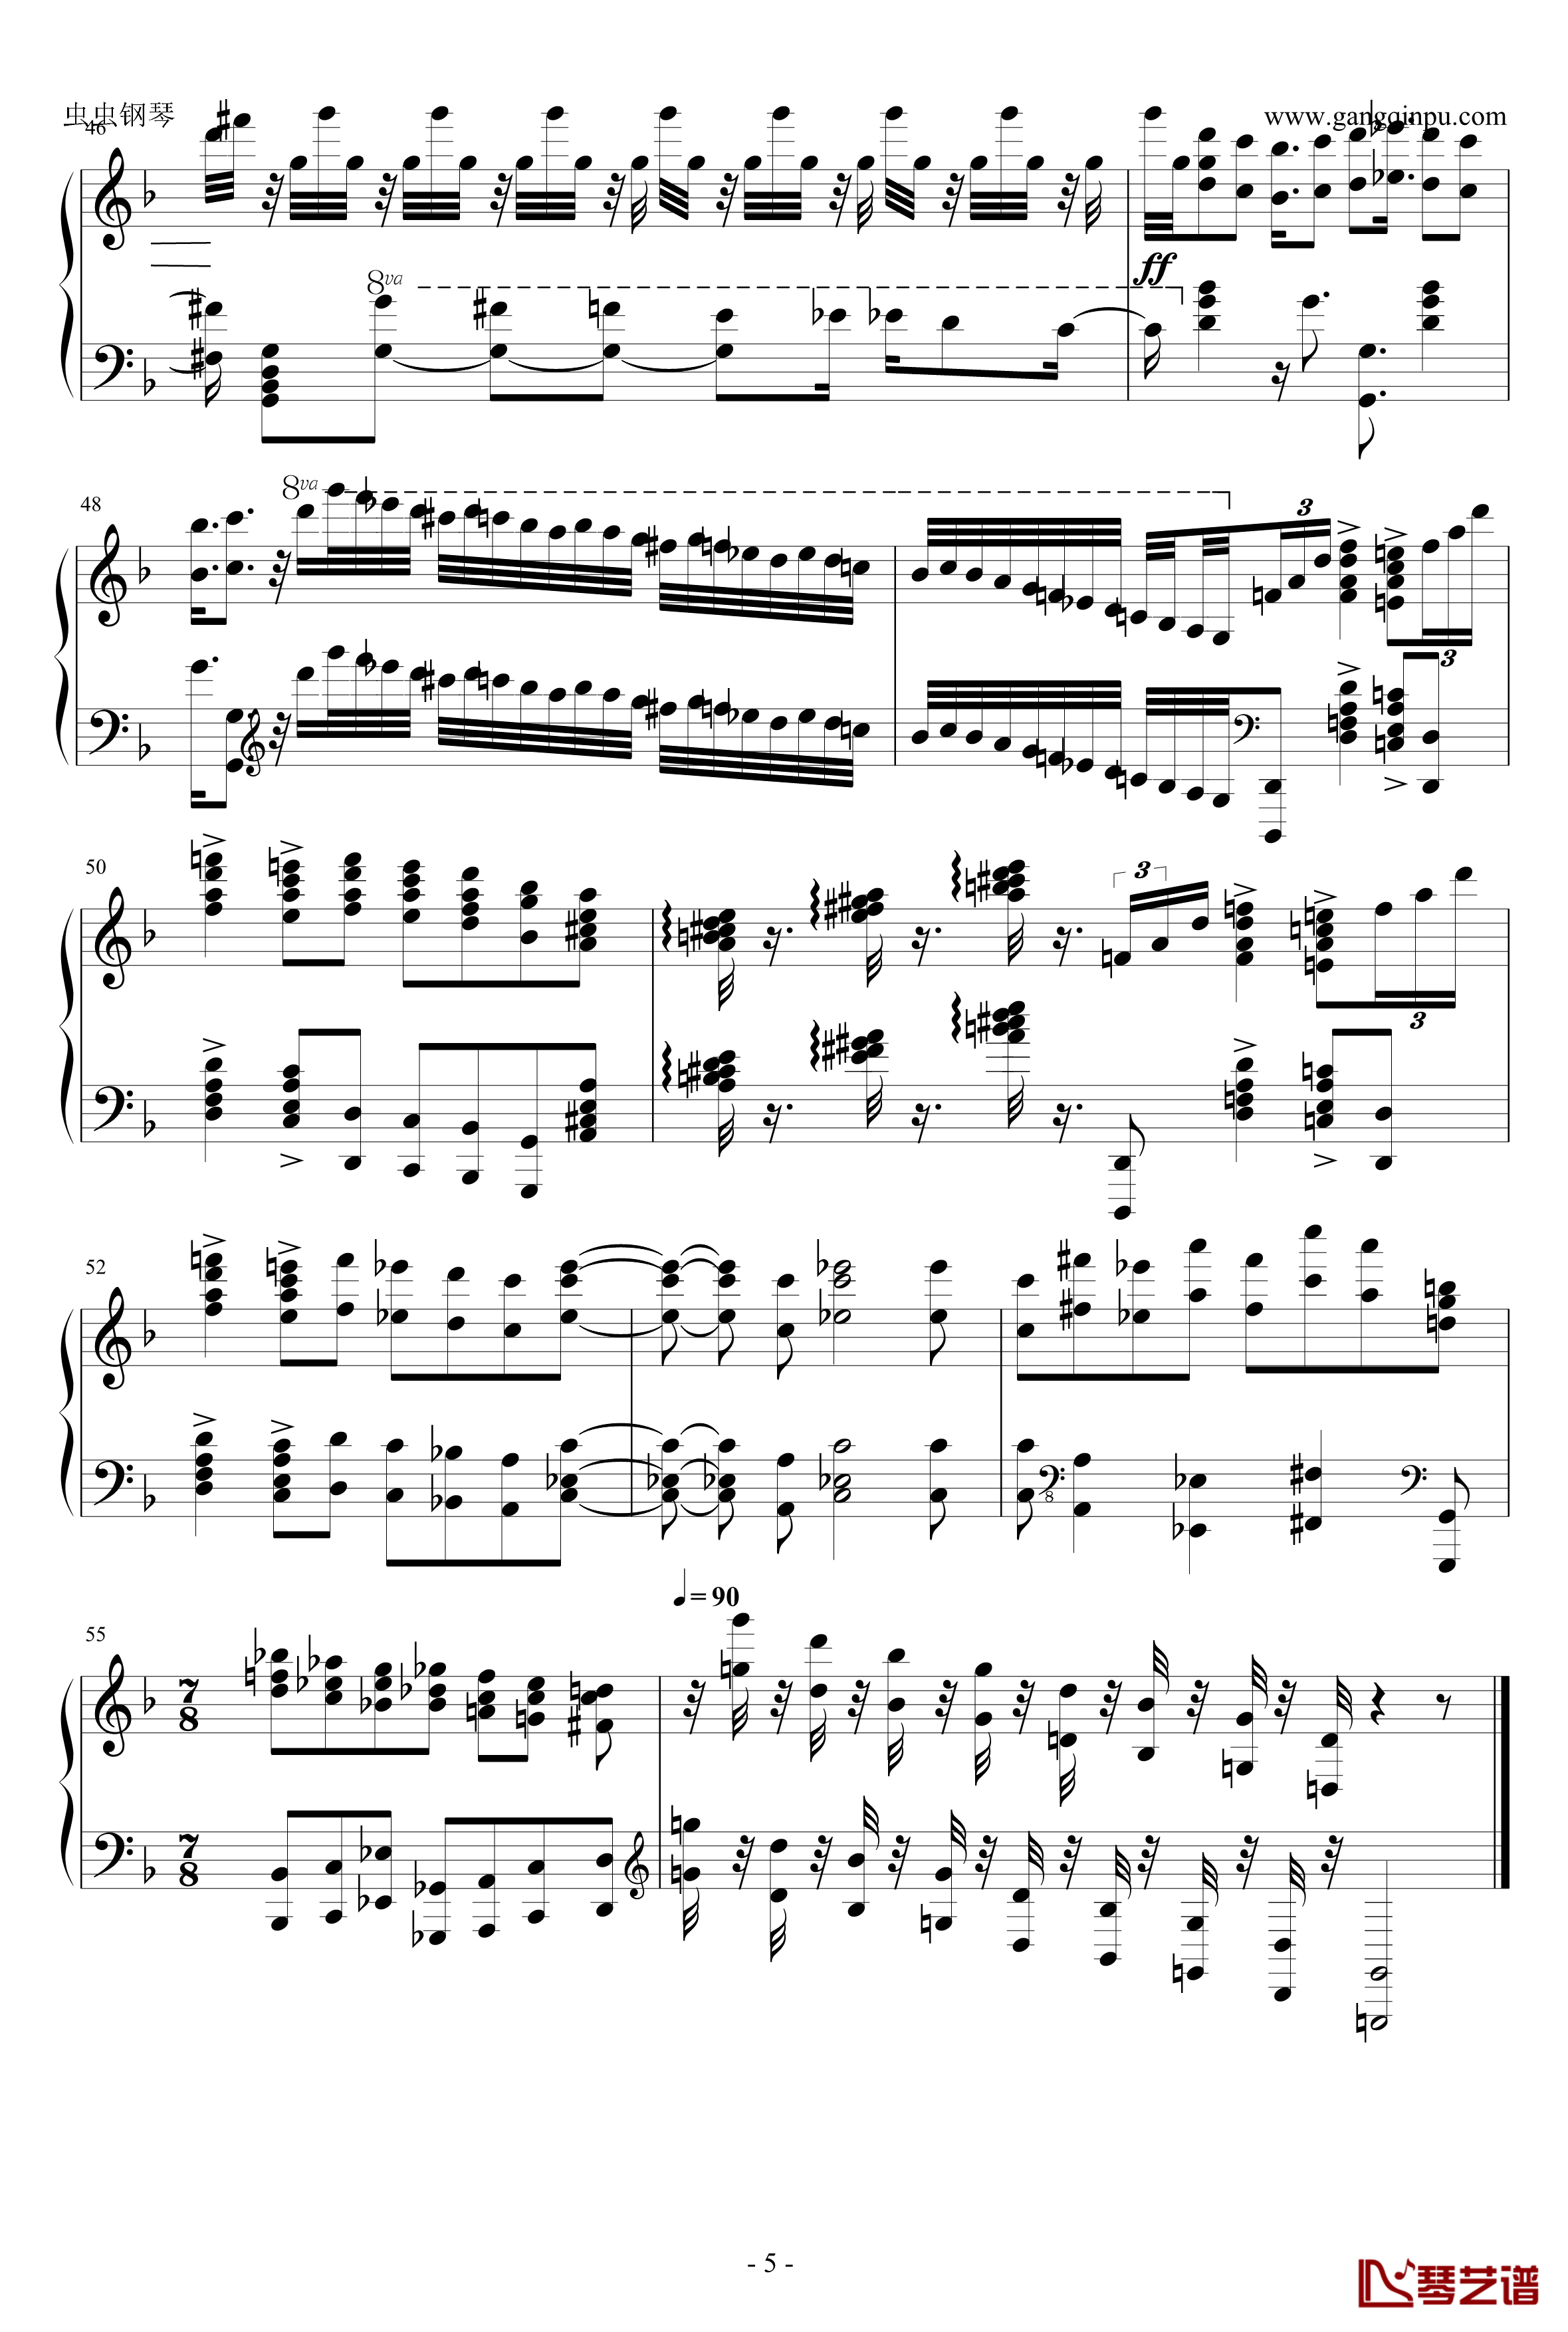 Requiem钢琴谱-安魂曲-马克西姆maksim-Maksim·Mrvica